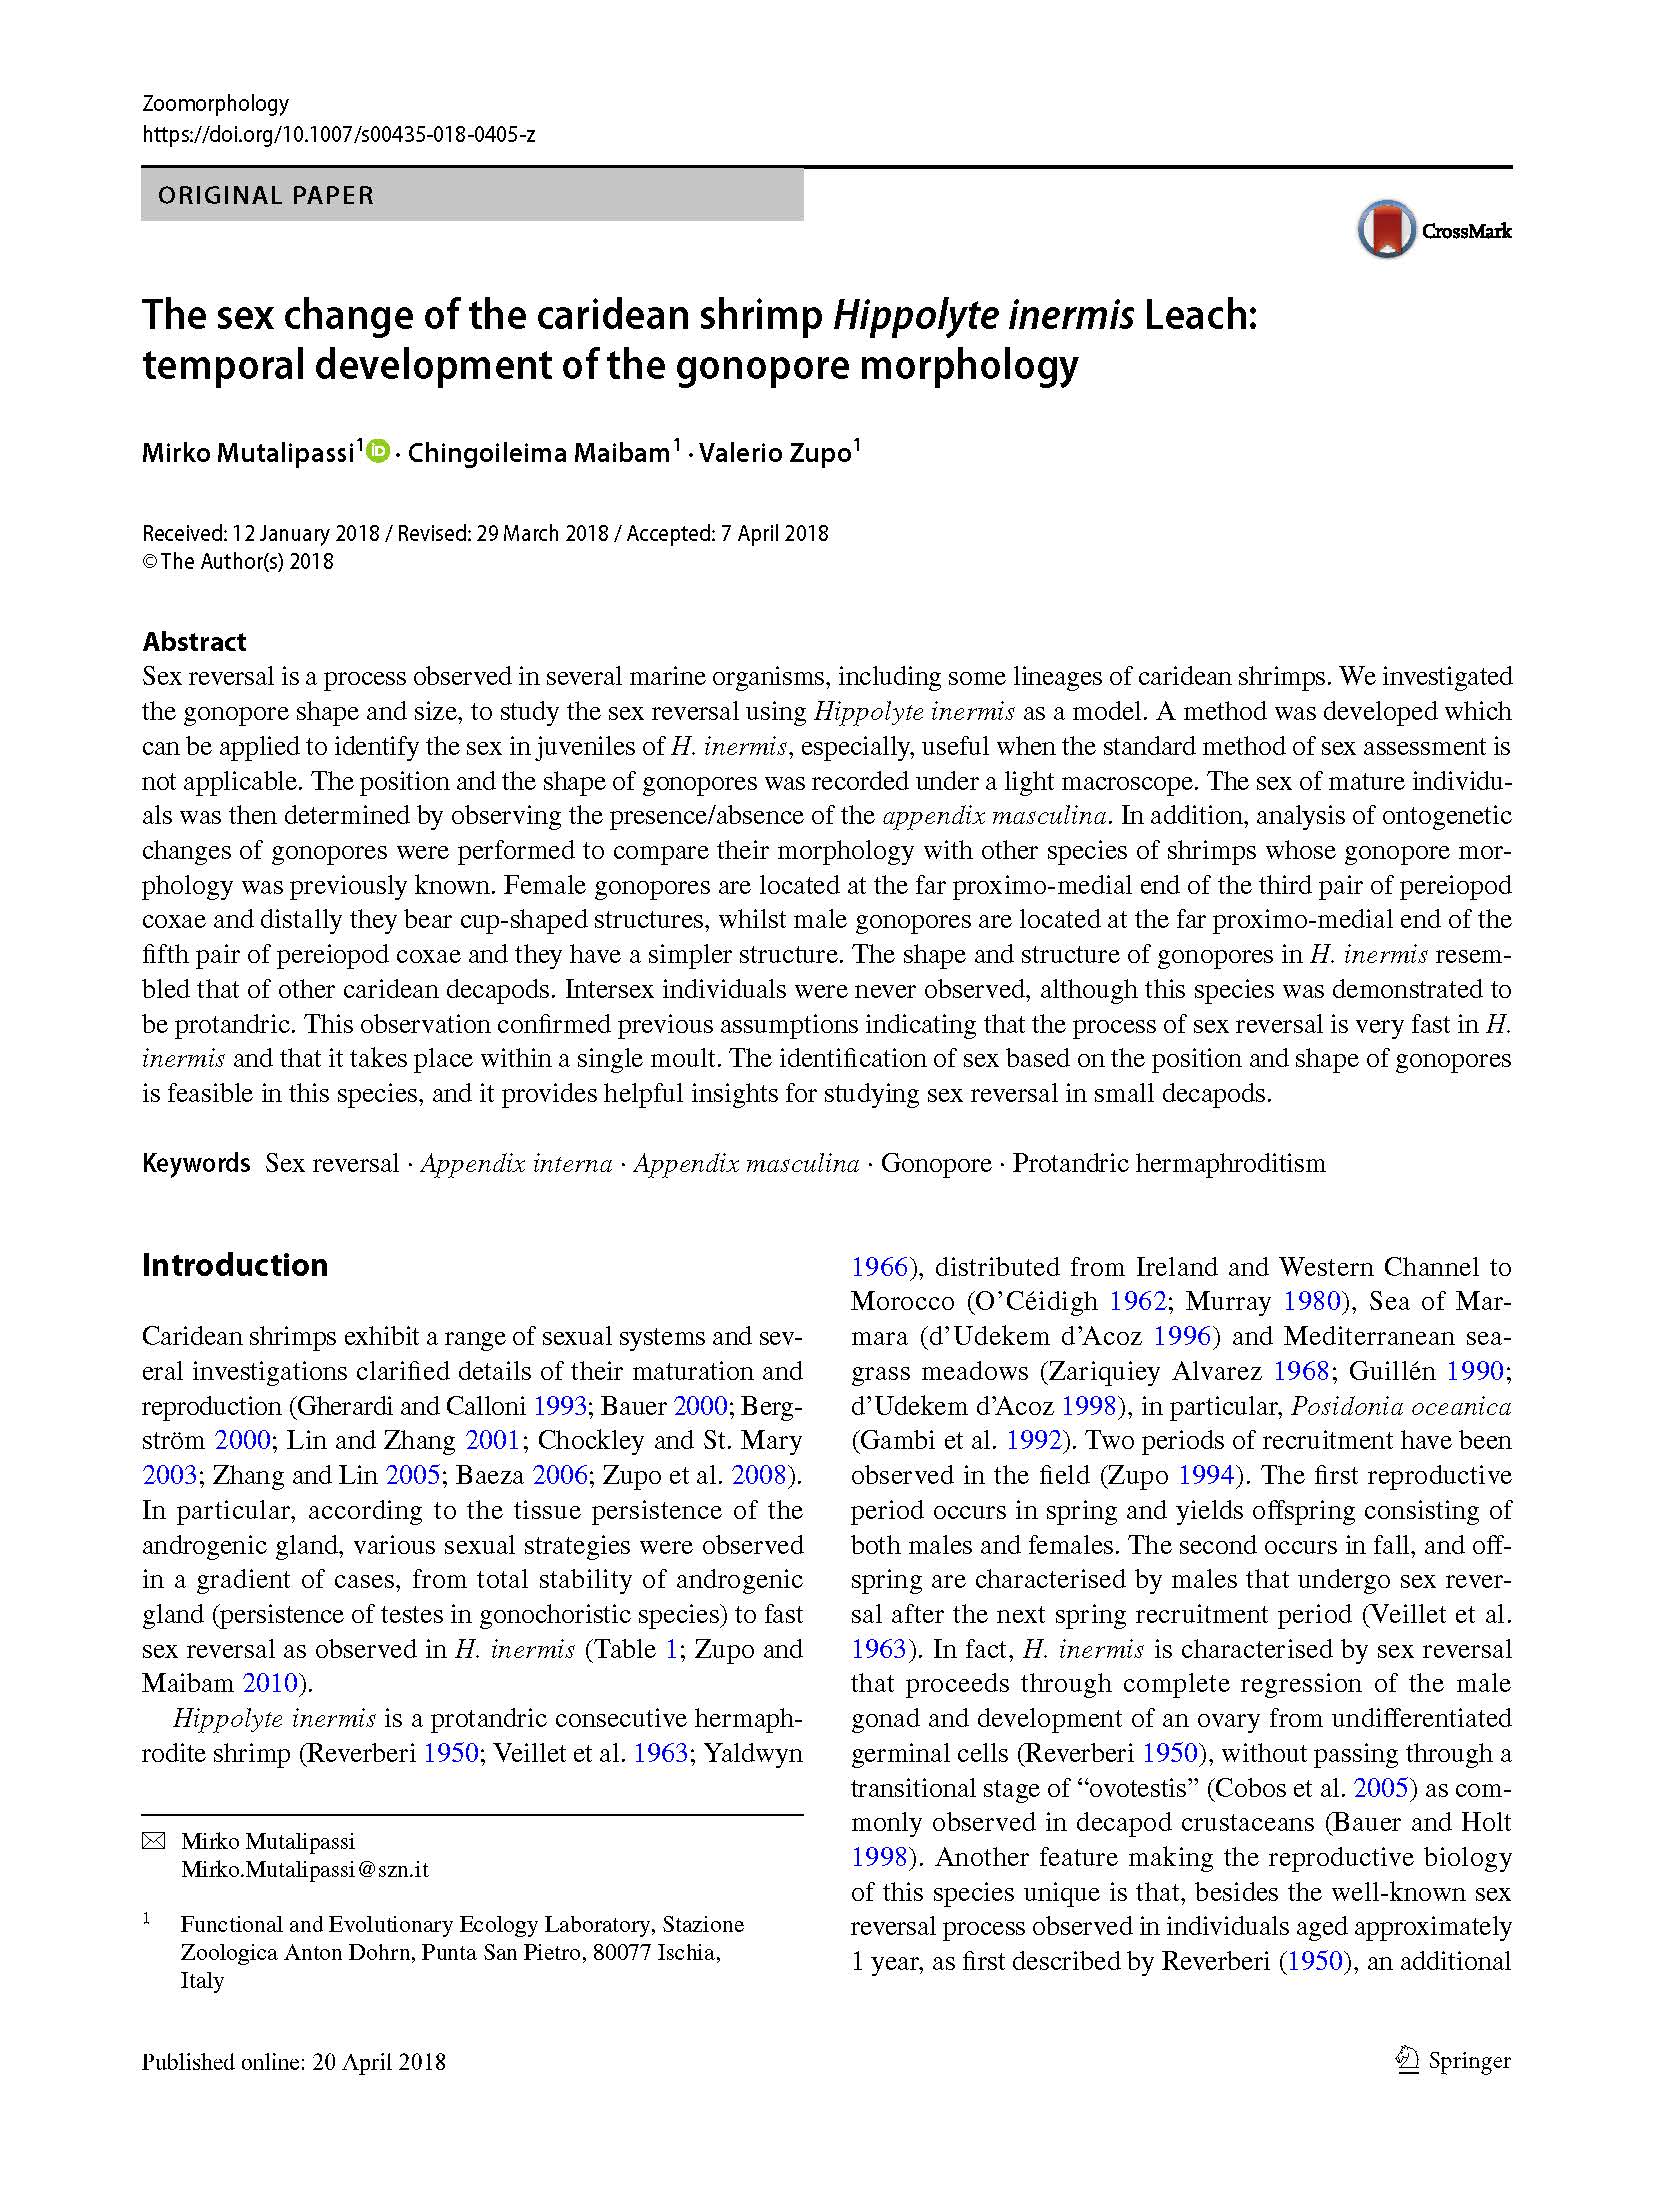 Mutalipassi Maibam Zupo 2018 The sex change of the caridean shrimp Hippolyte inermis Leach temporal development of the gonopore m